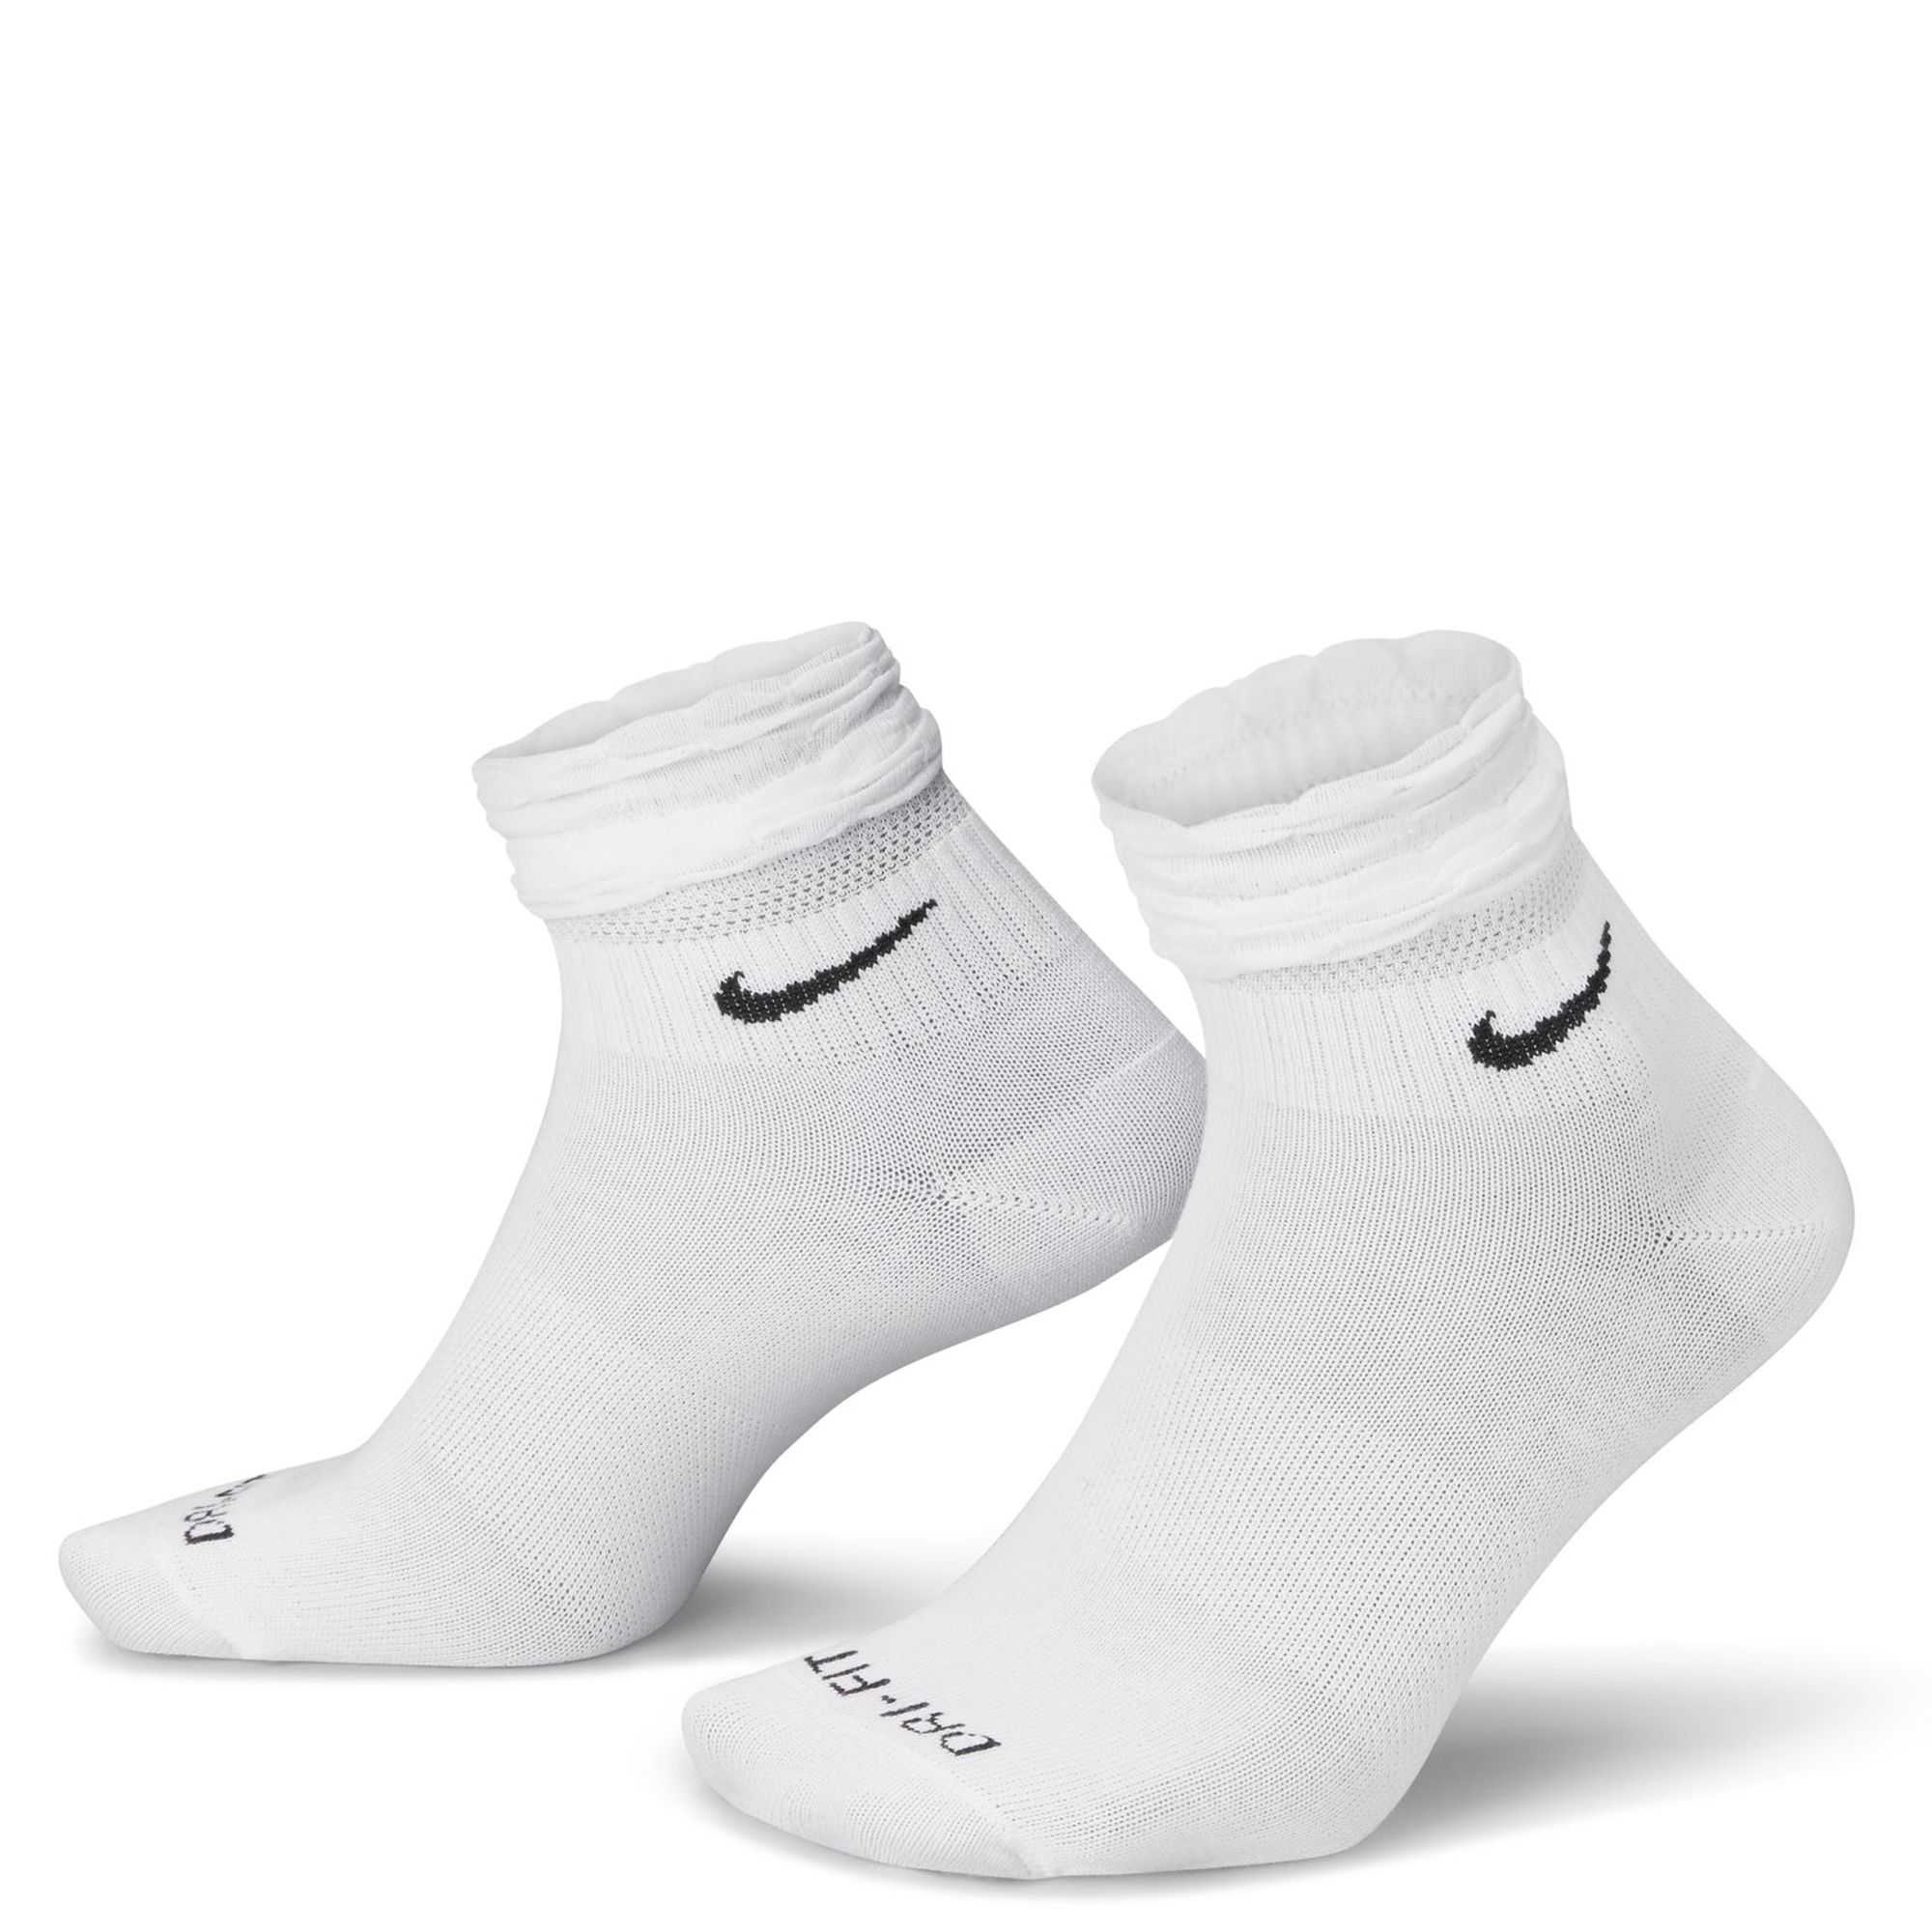 Nike Women's Everyday Cotton Cushioned Crew Training Socks White